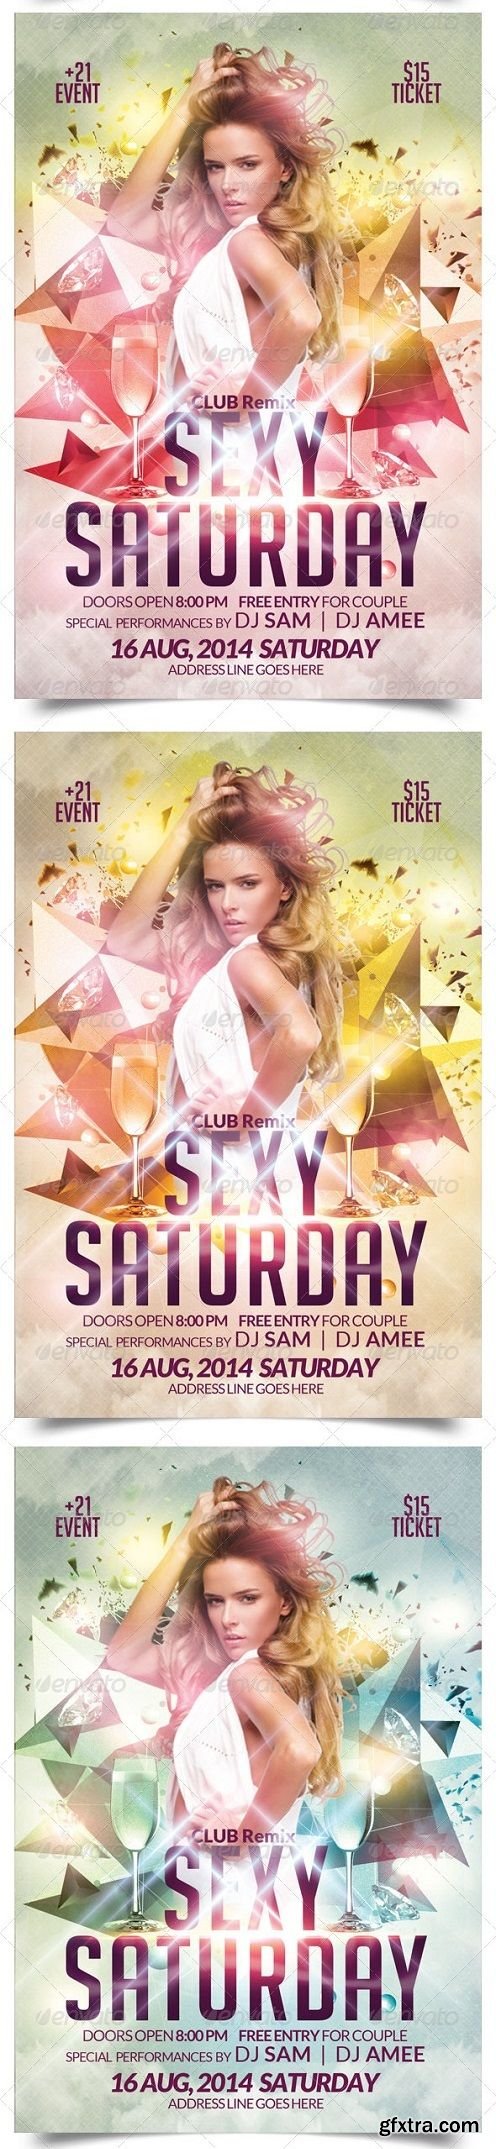 Sexy Saturday Party Flyer - GraphicRiver 8548546